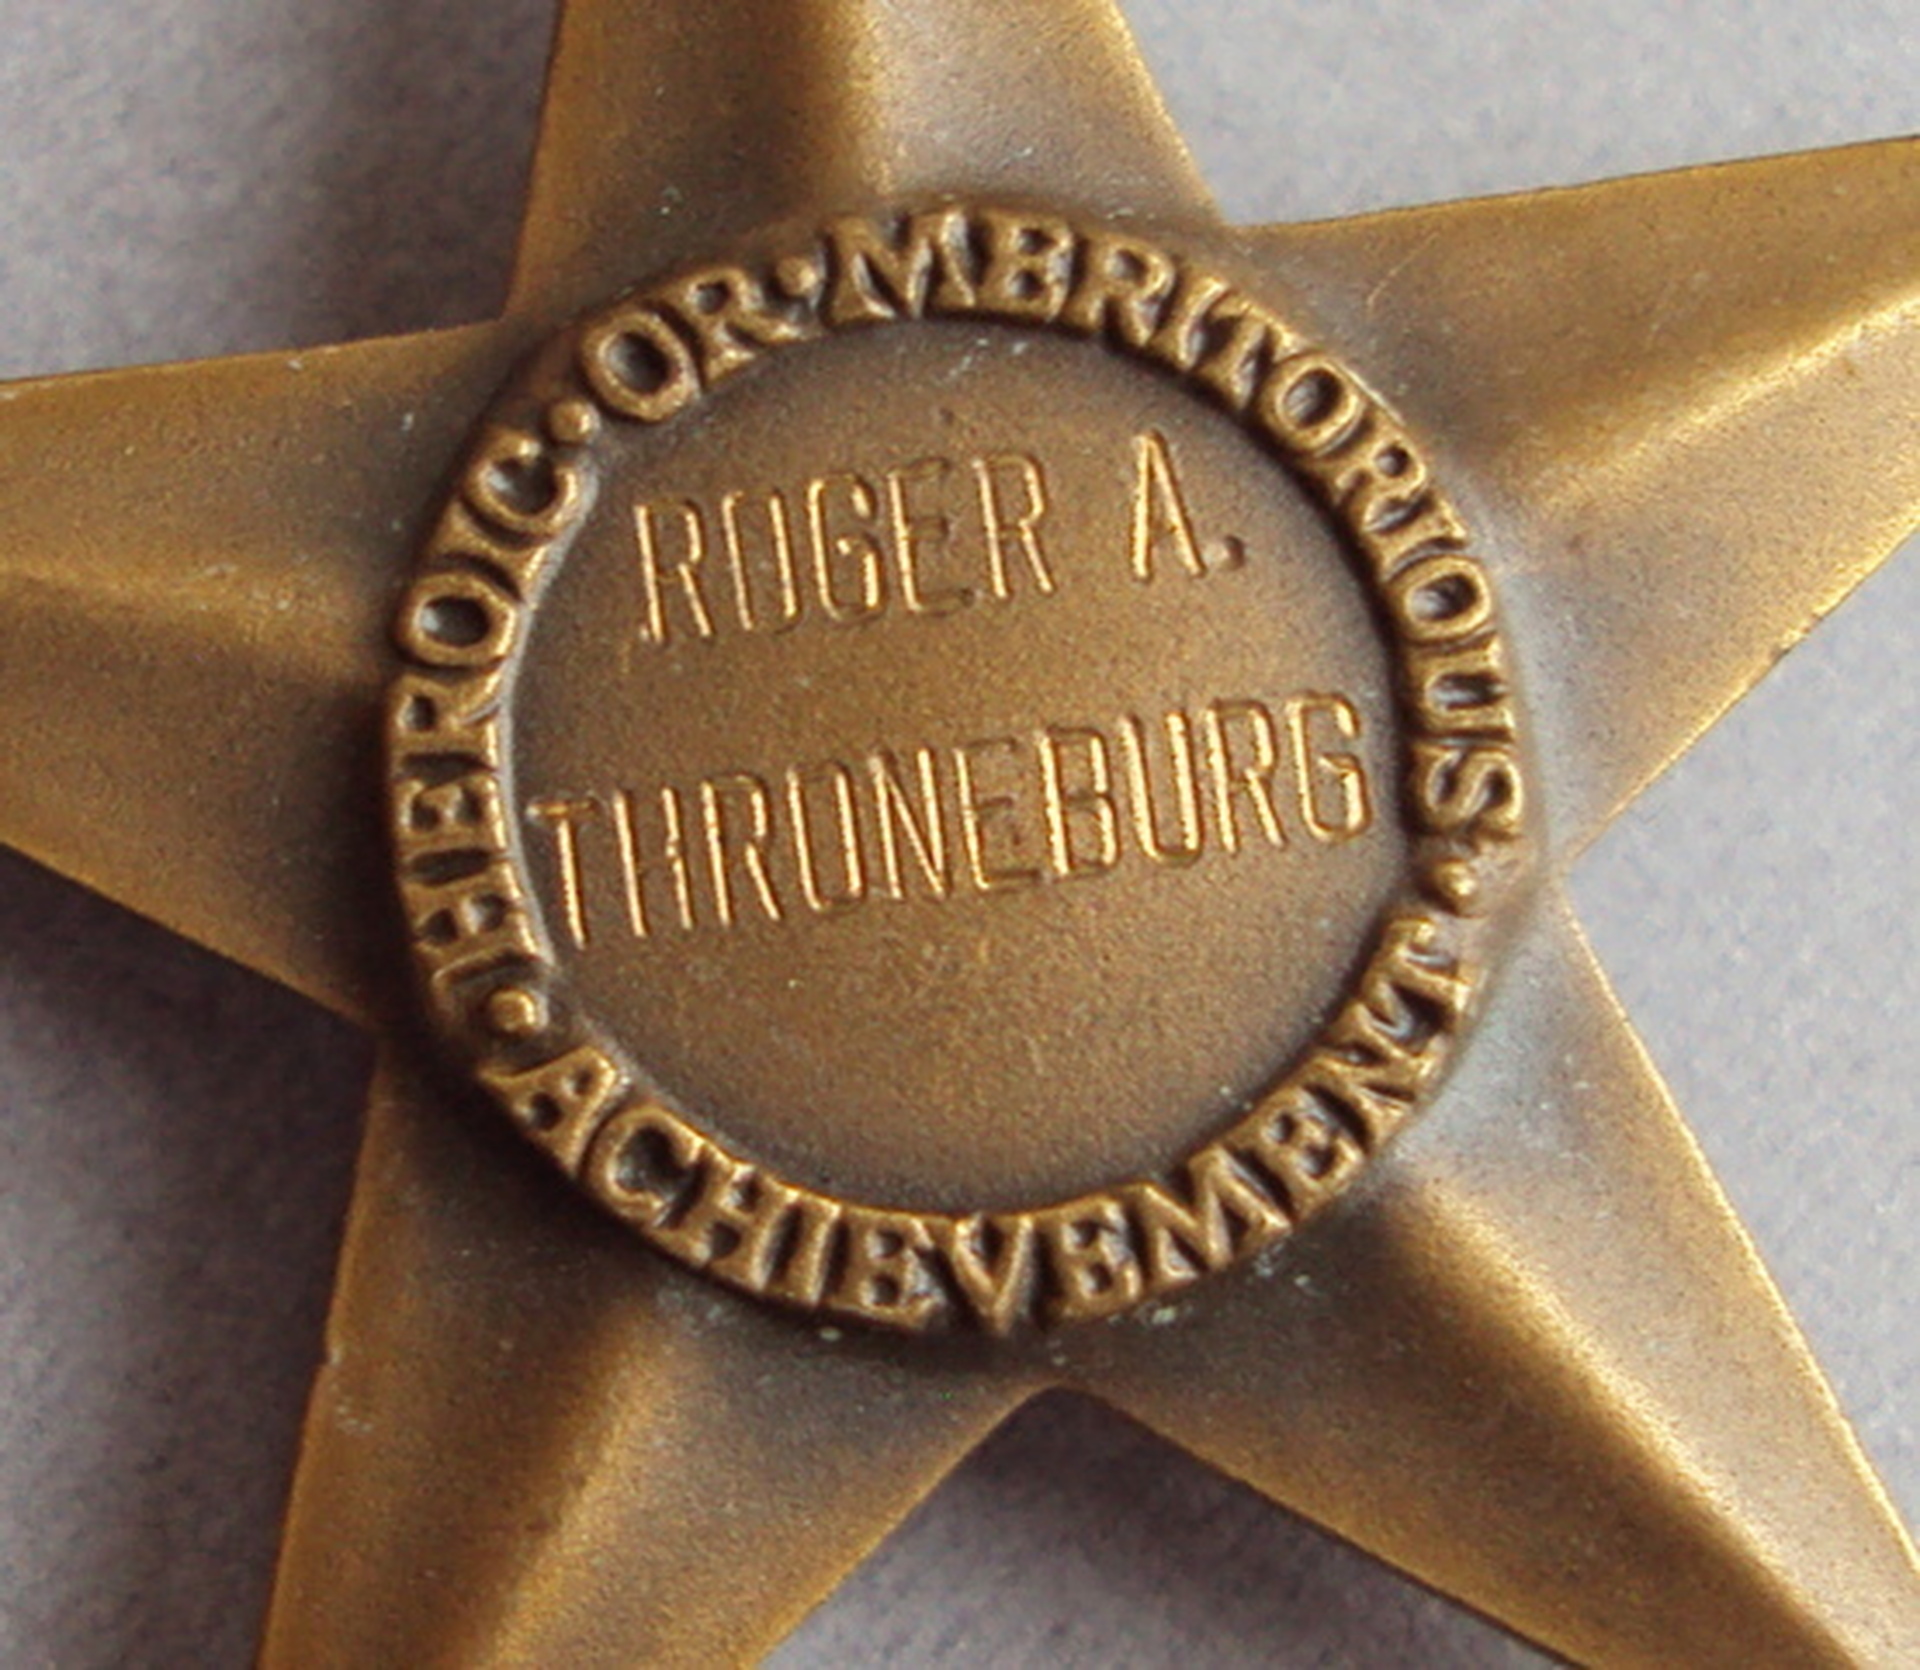 Cased Bronze Star Medal WW2-type